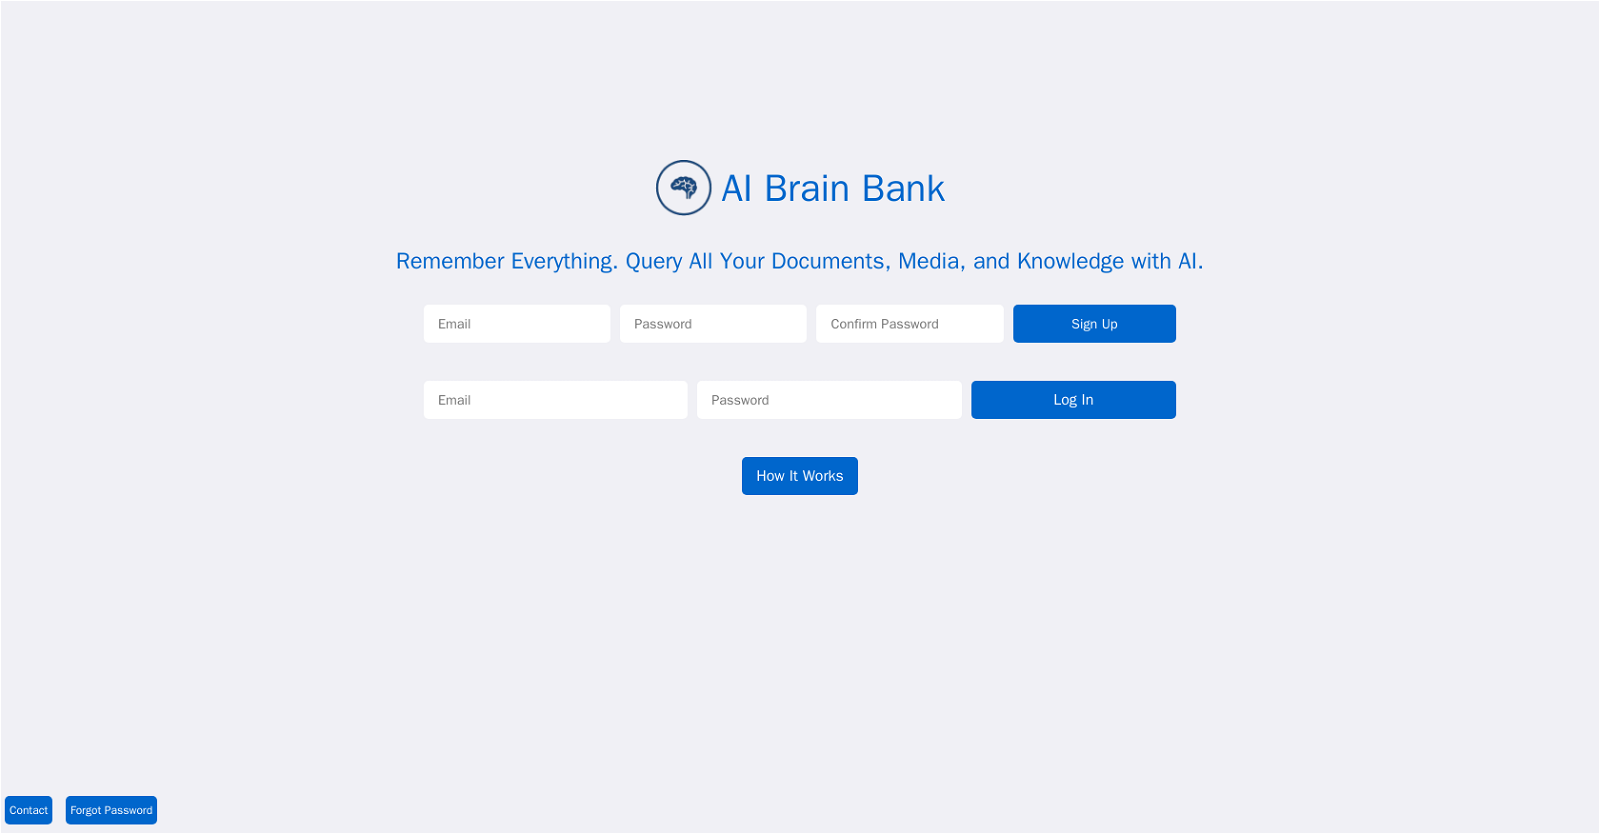 AI brain bank website